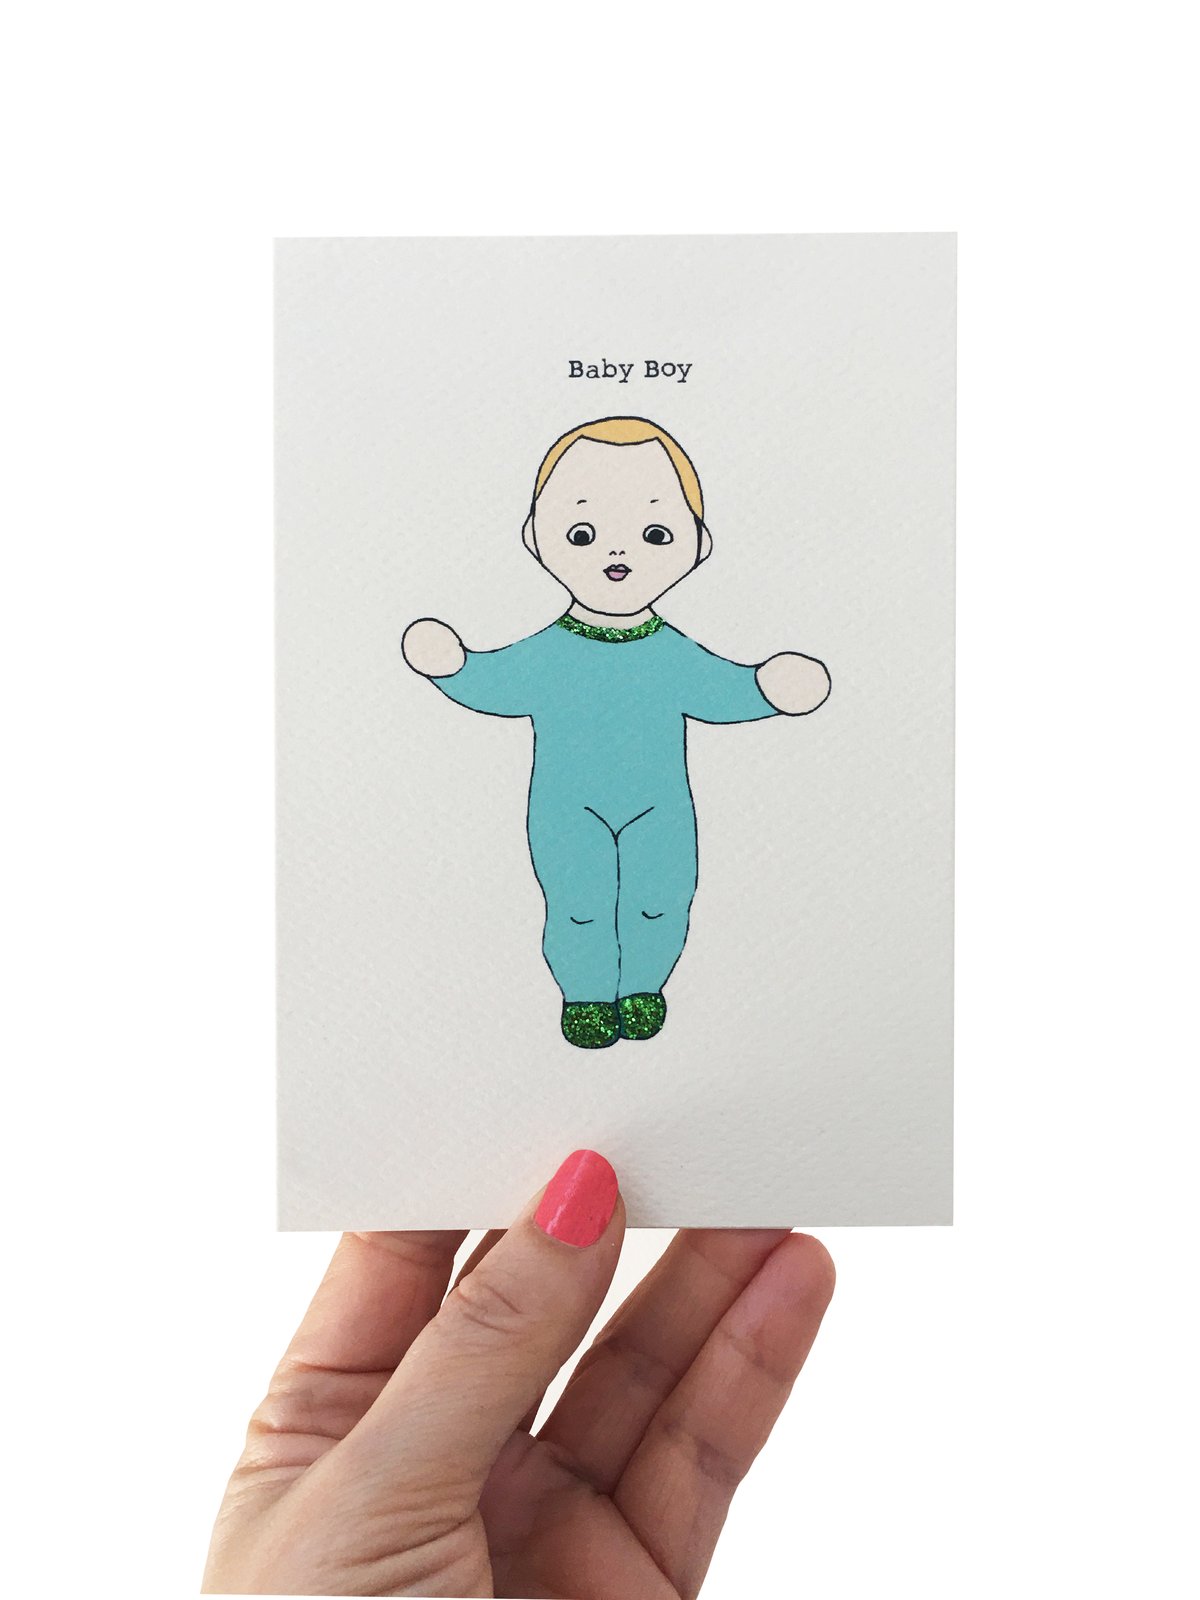 Baby Boy Card - Dark Hair or Blonde Hair